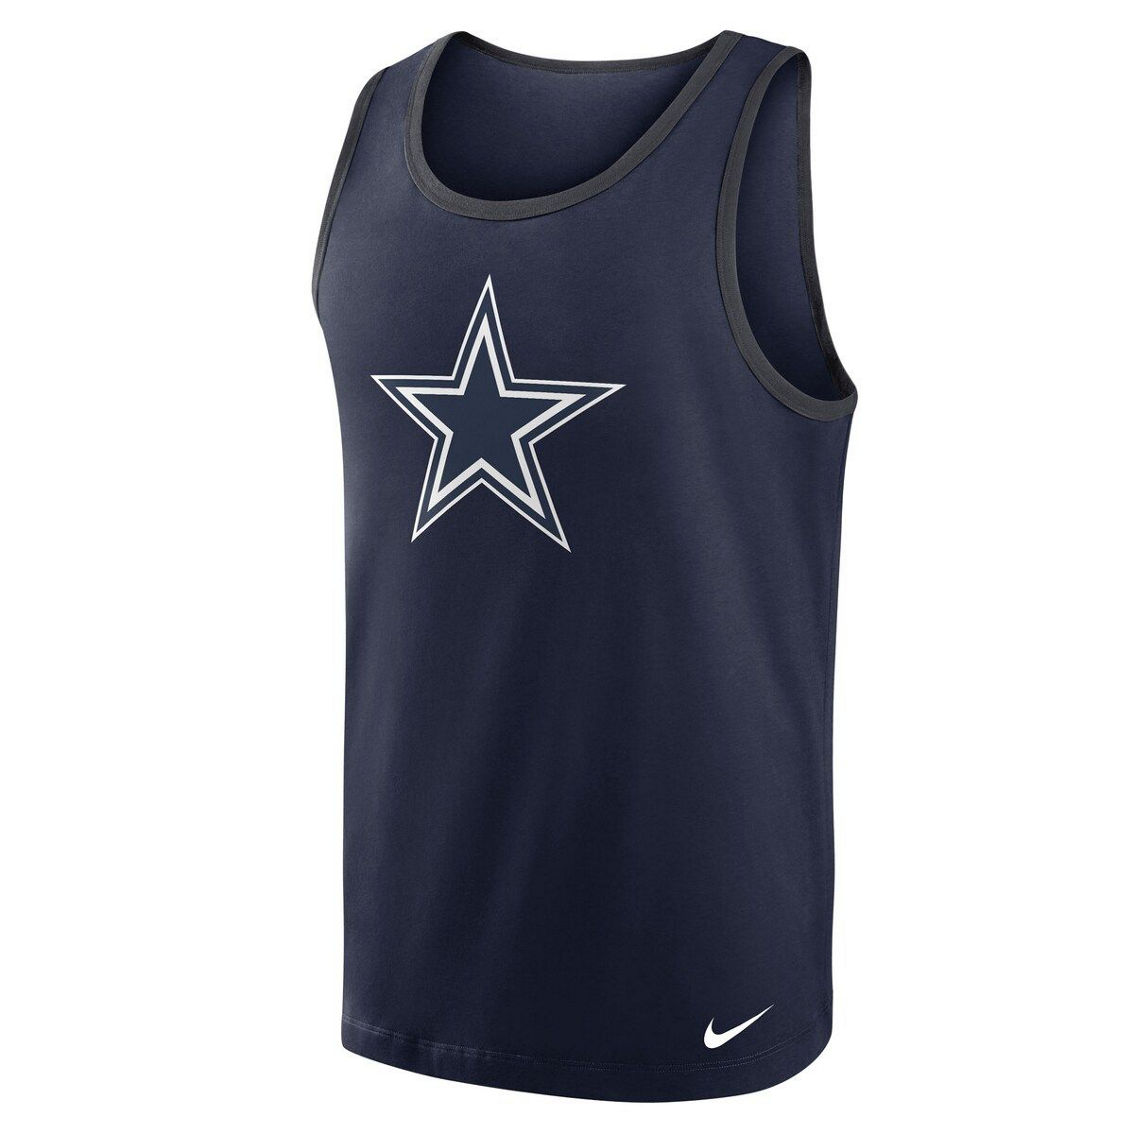 Nike Men's Navy Dallas Cowboys Tri-Blend Tank Top - Image 3 of 4